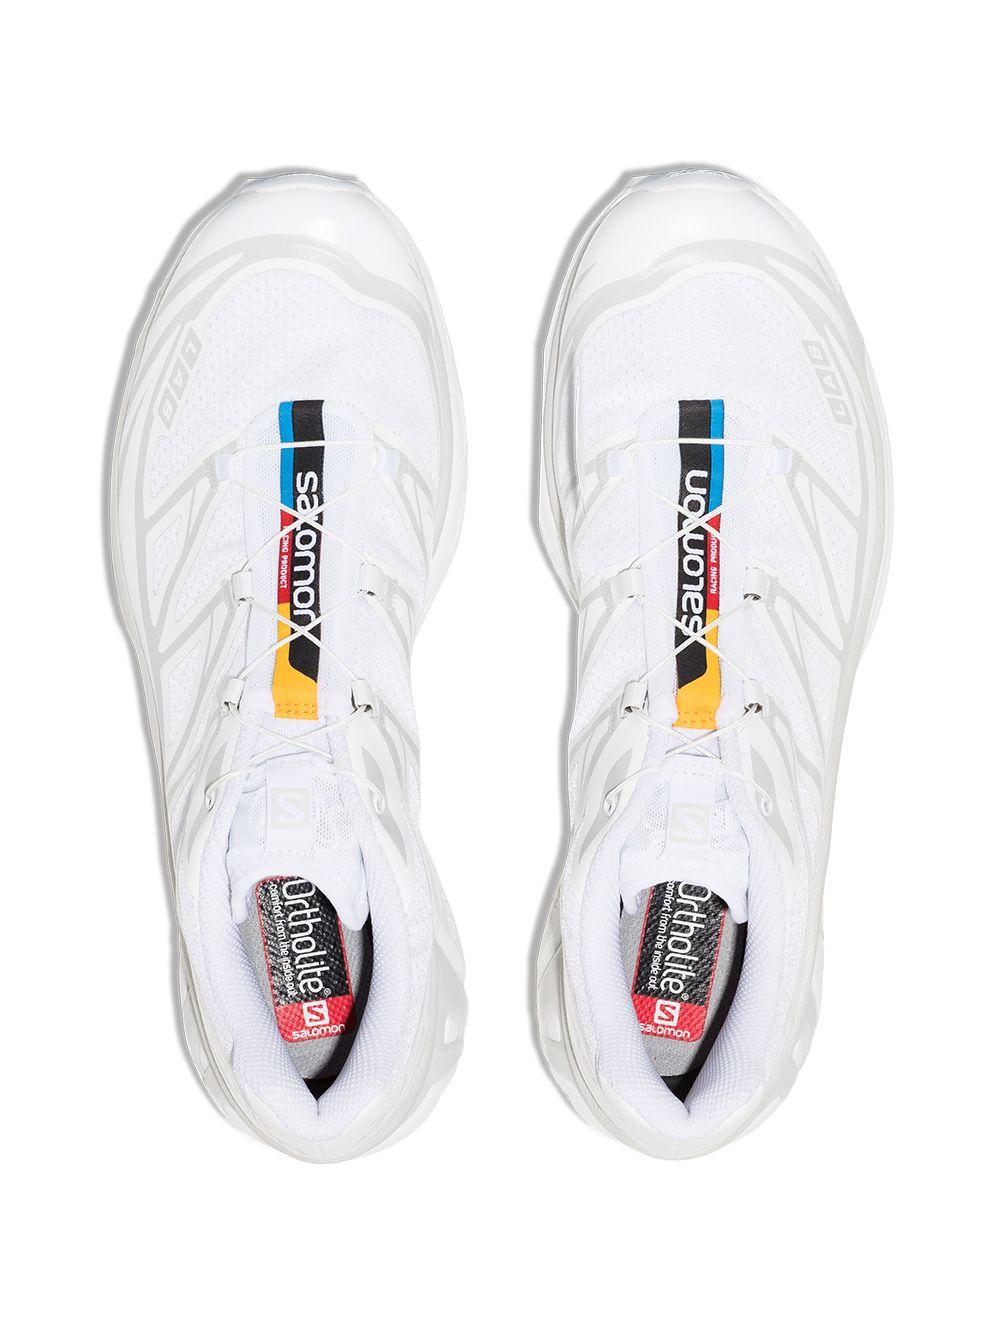 Salomon S/LAB Xt-6 Adv Sneakers in White for Men - Lyst